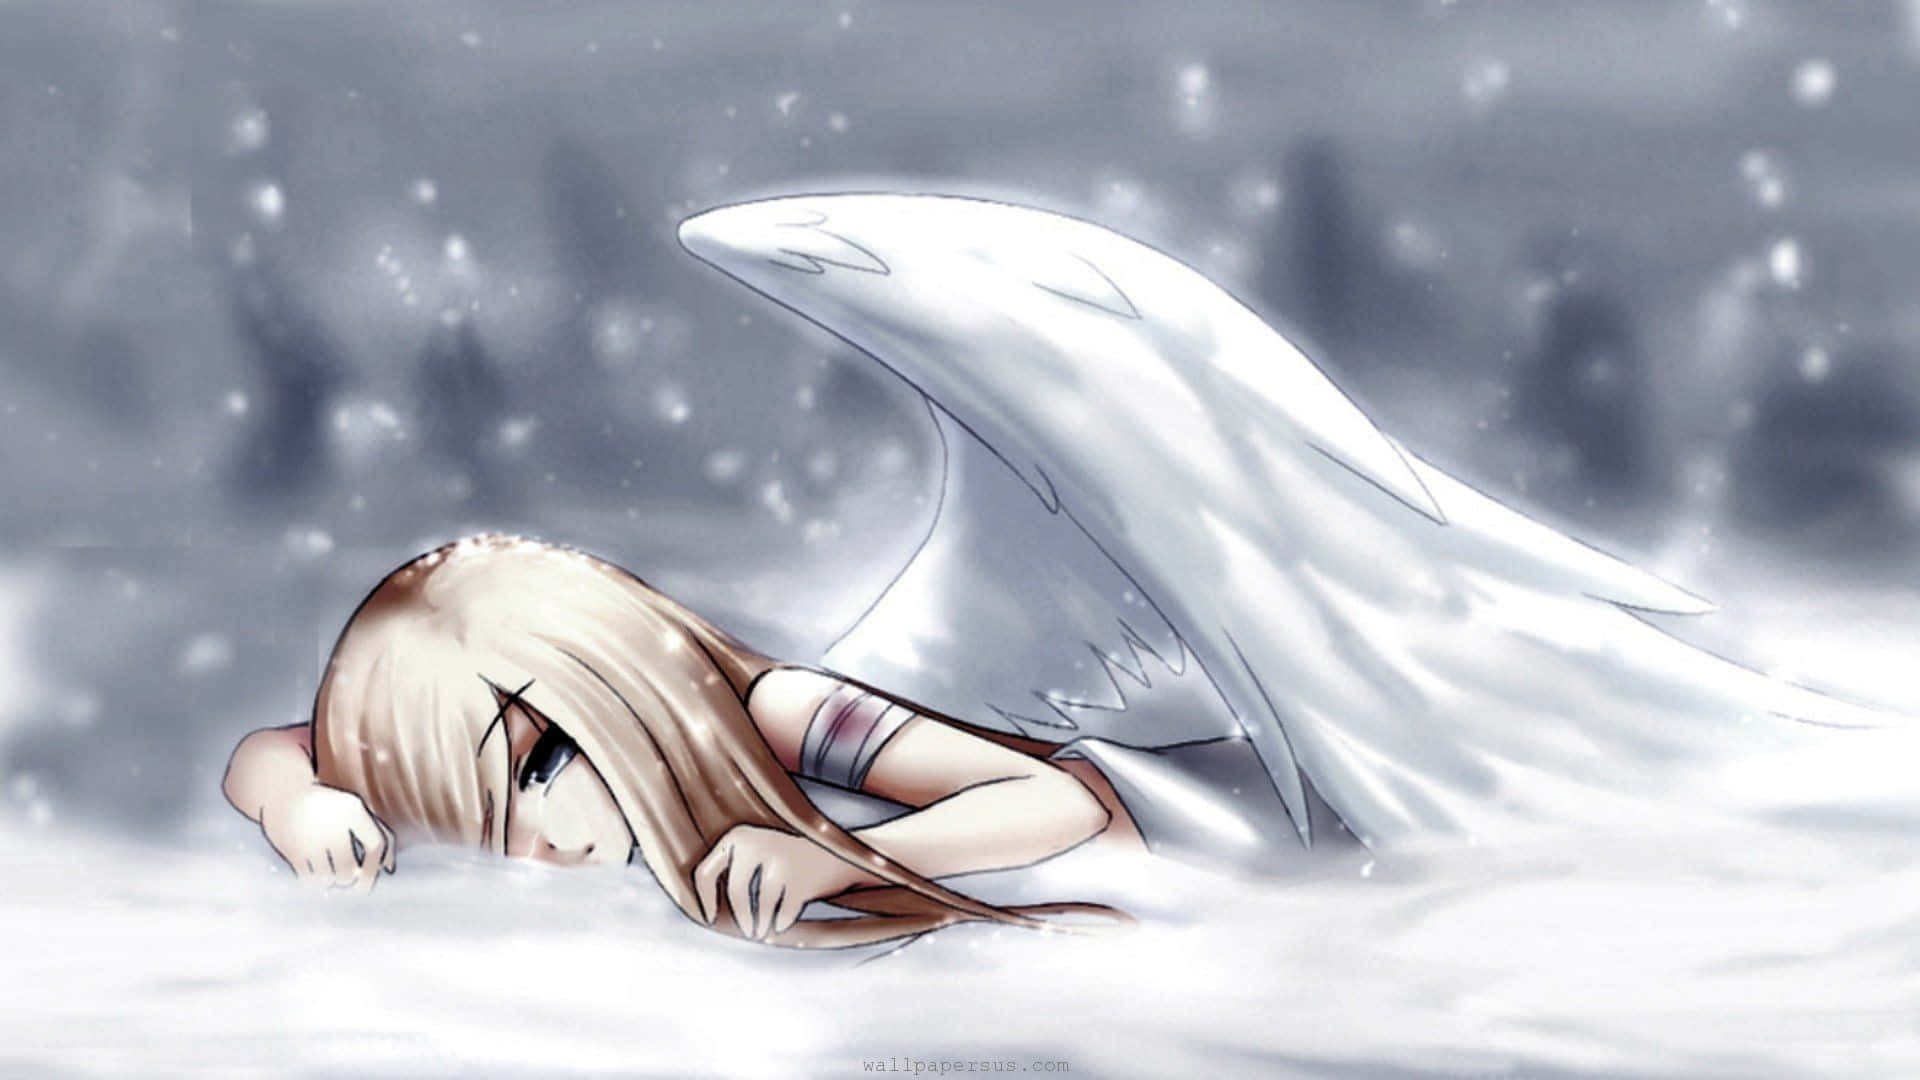 Snow Angel Delight Wallpaper